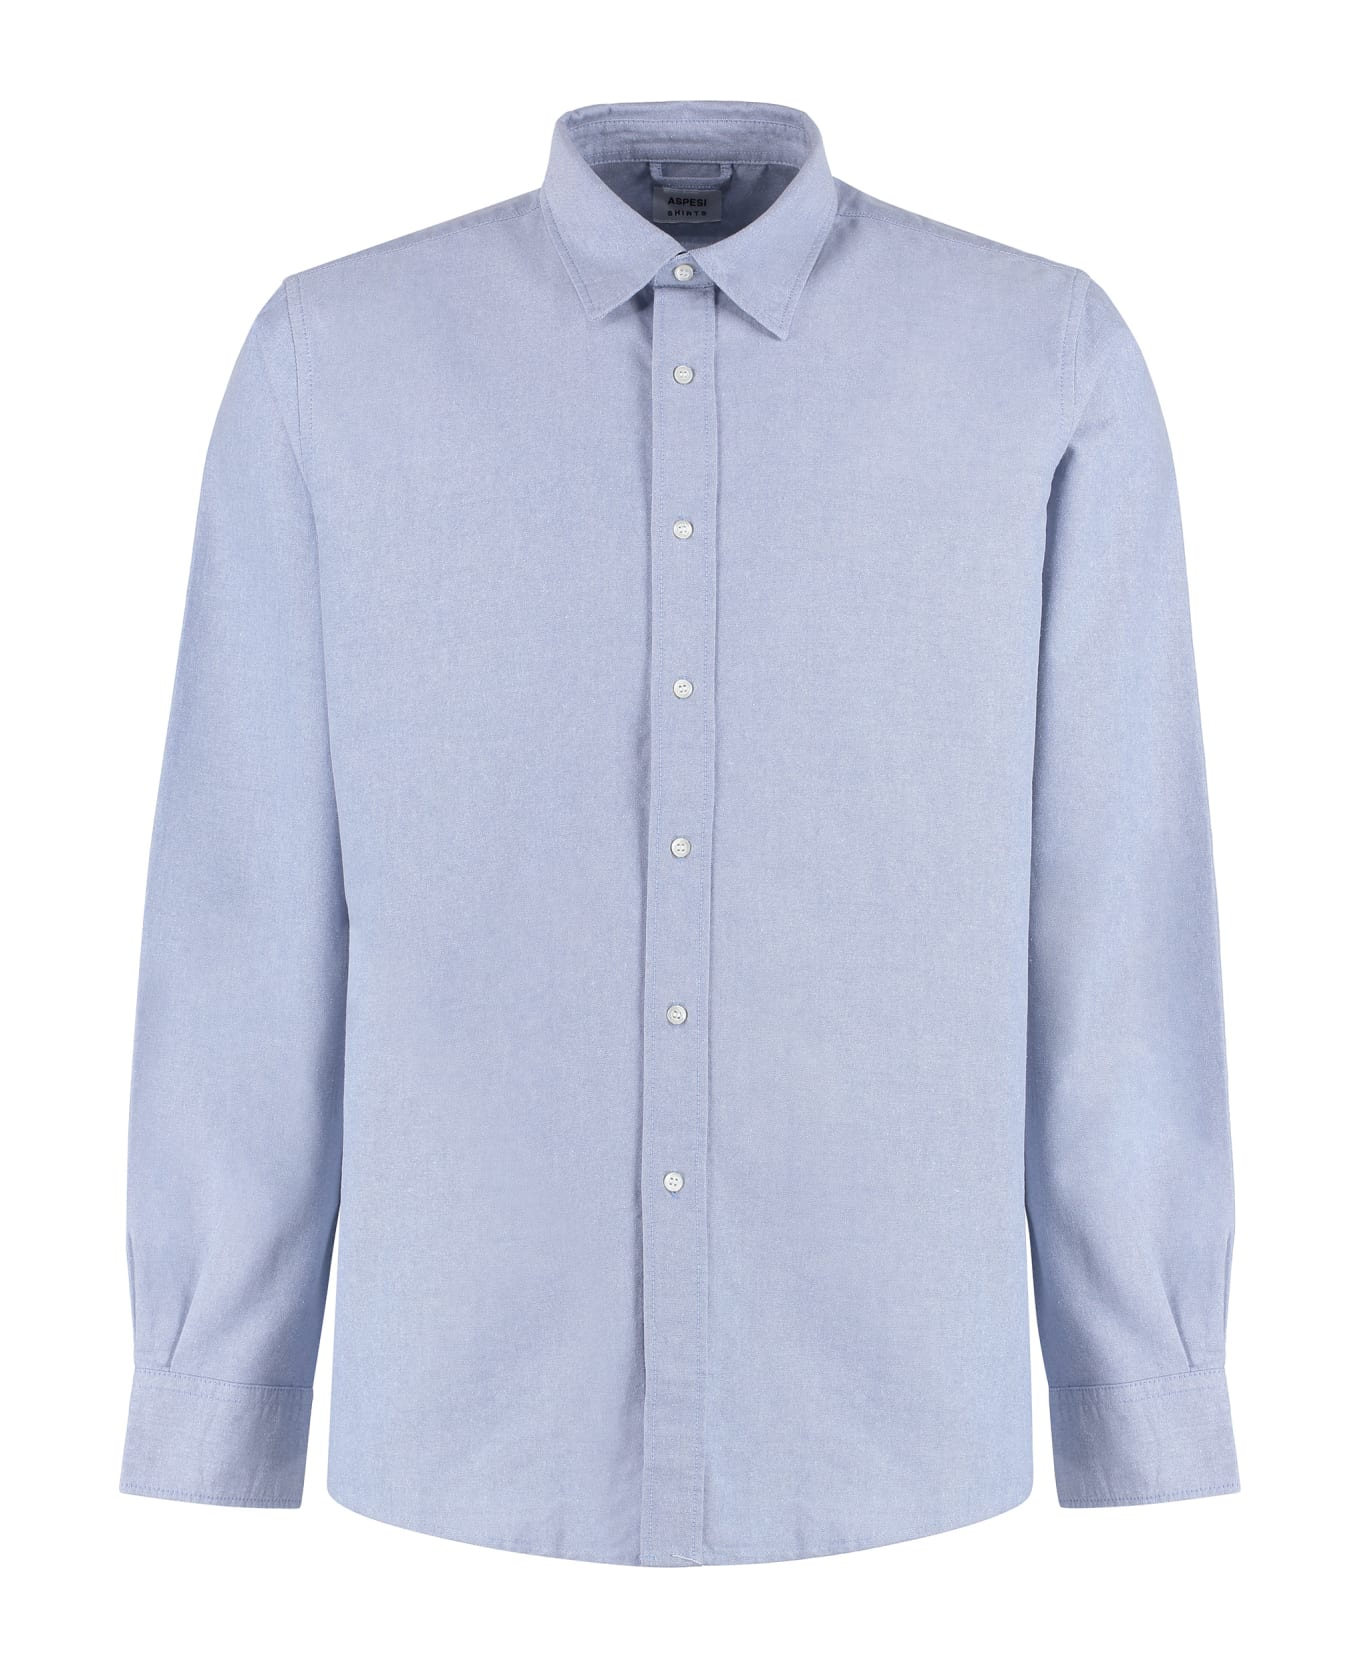 Aspesi Sterling Oxford Cotton Shirt - Light Blue